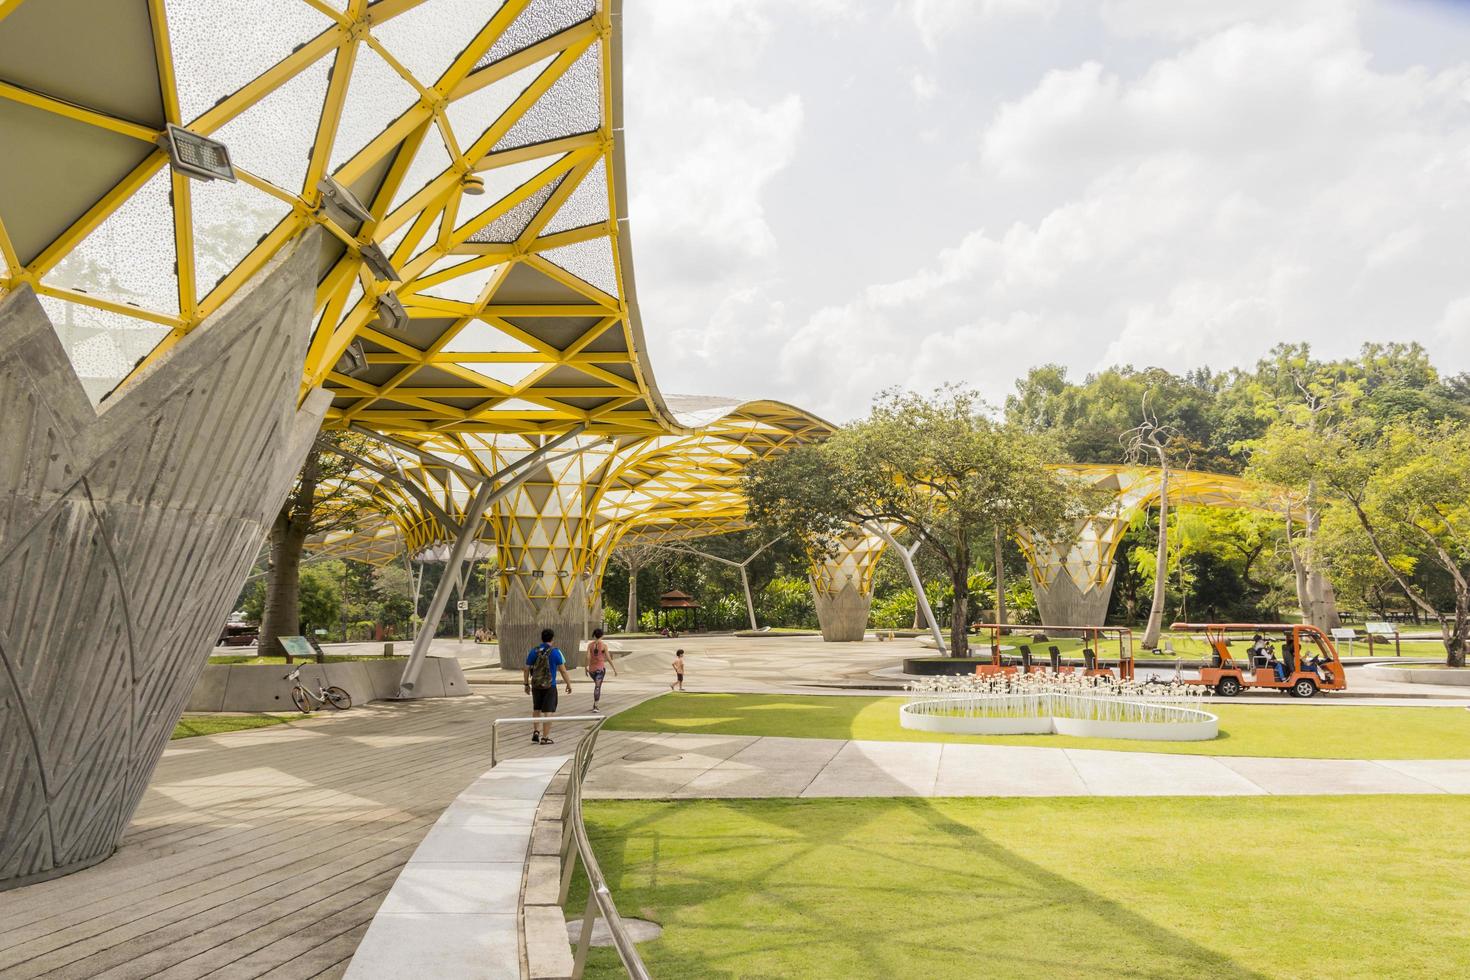 Laman Perdana, hermoso pabellón de arquitectura en los jardines botánicos del lago Perdana, Malasia foto